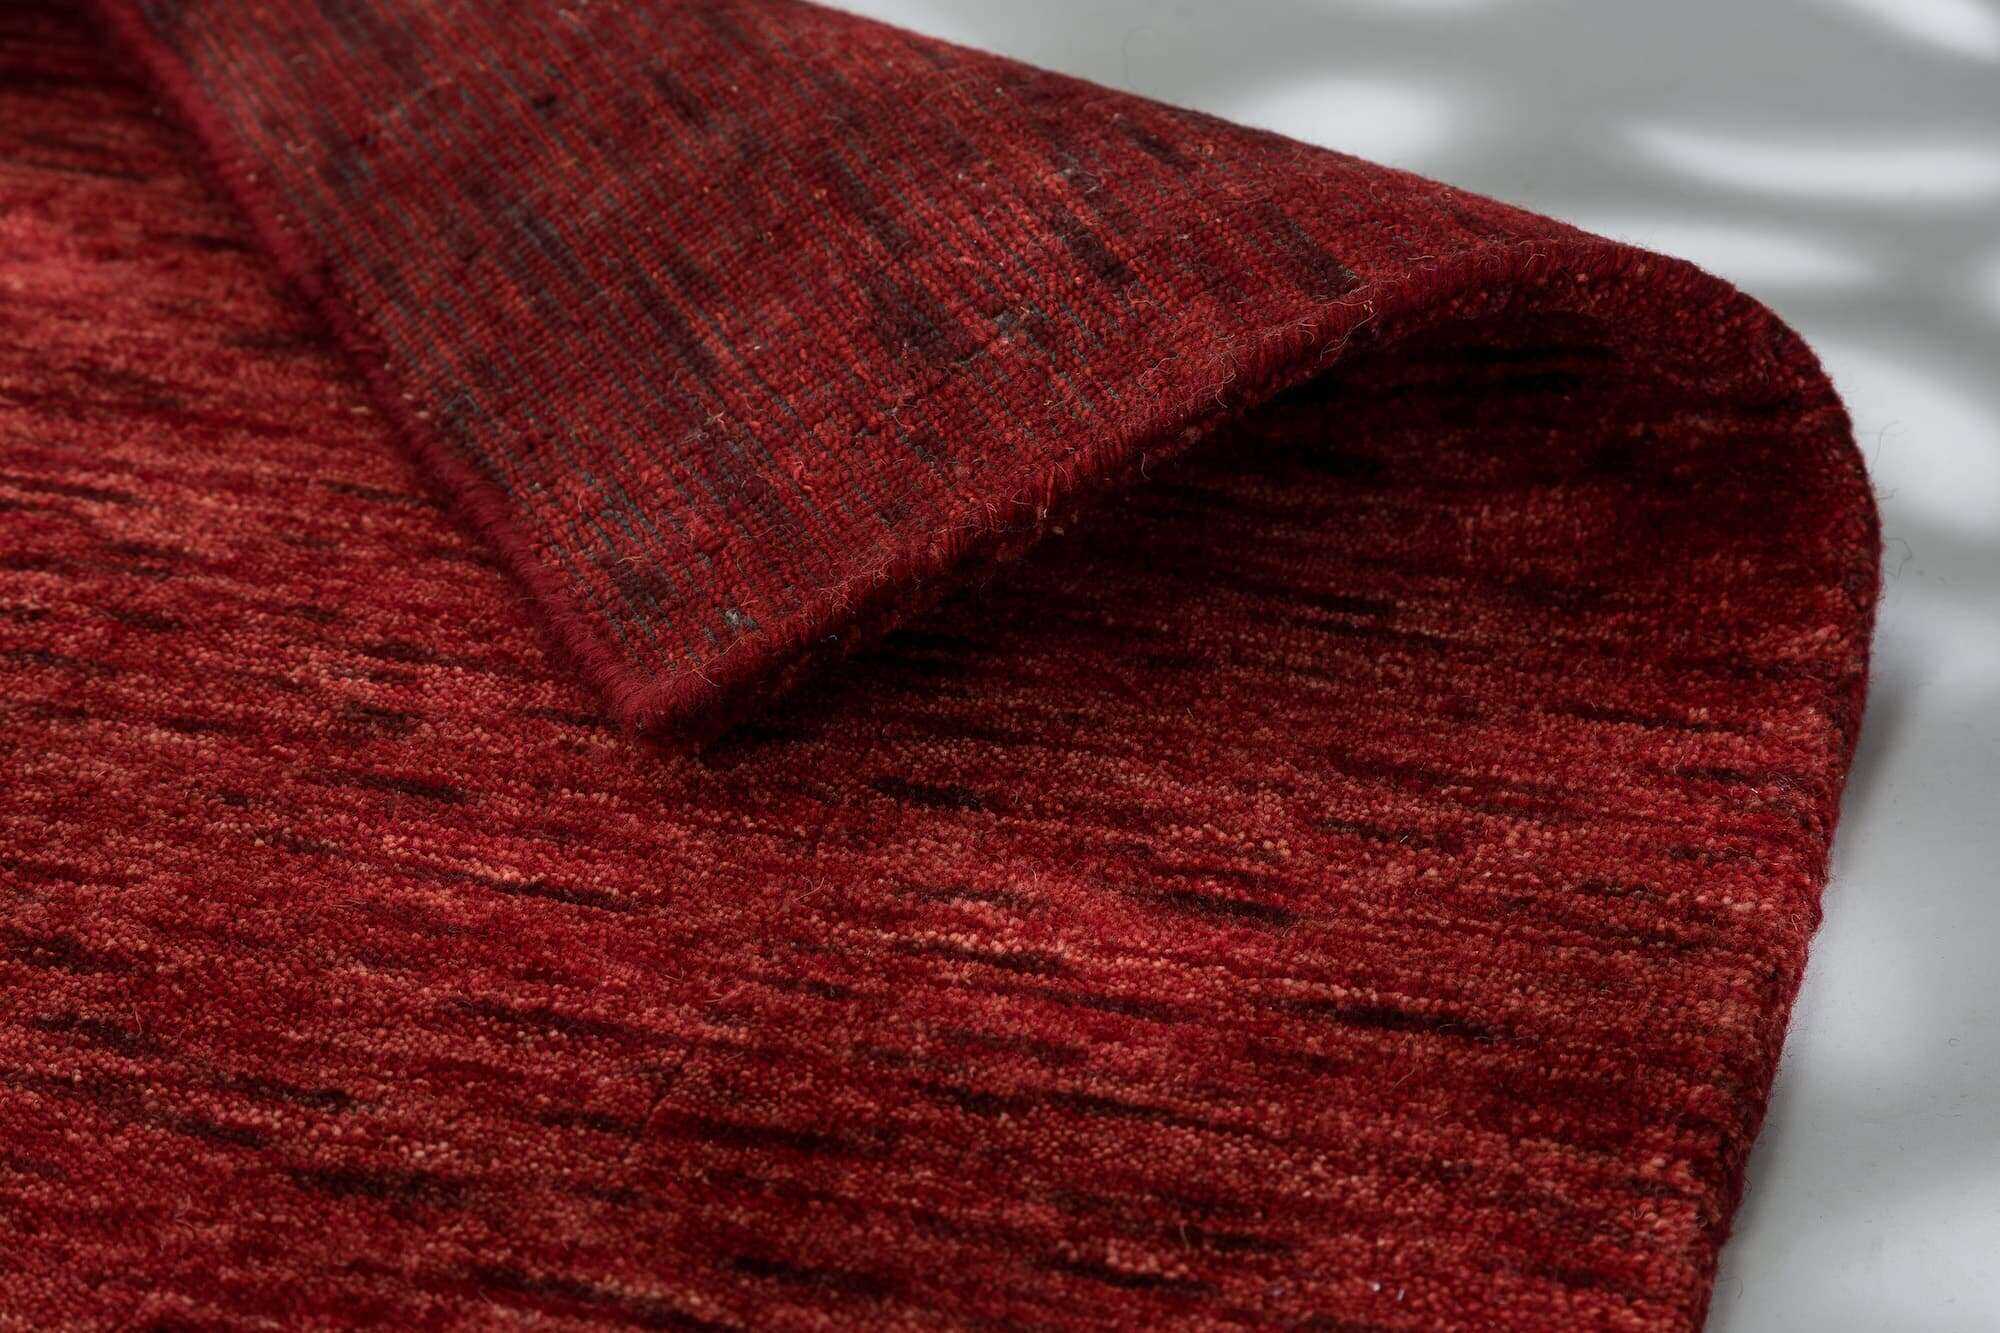 Barolo 6677 handgewebter Teppich aus Wolle Wunschmaß rot